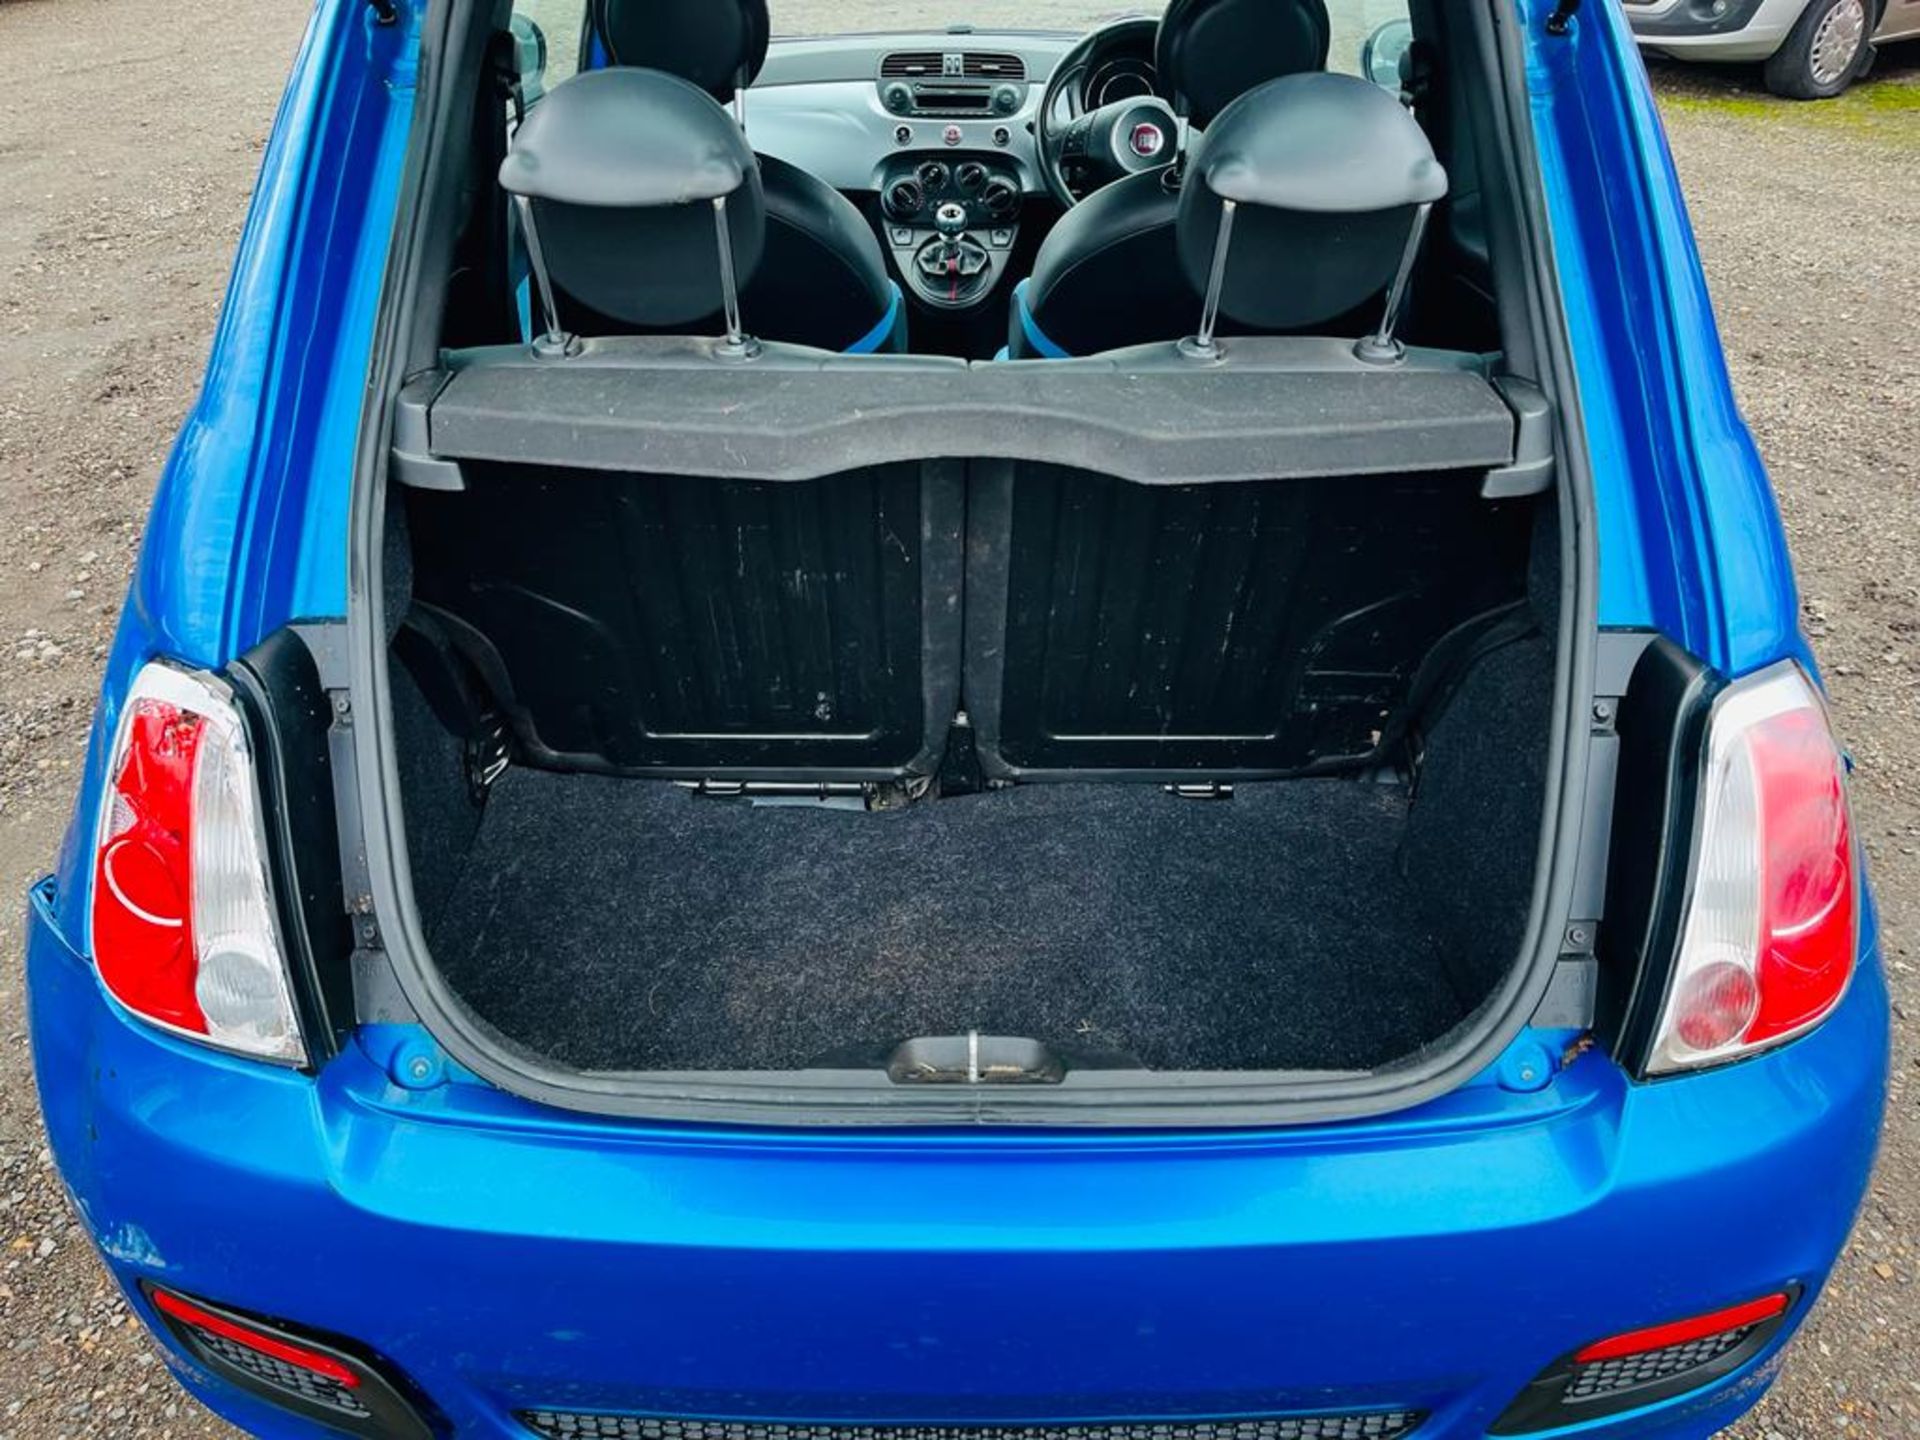 Fiat 500 S 1.2 Petrol 2015 '15 Reg' ULEZ Compliant - Only 64,819 Miles - No Vat - Image 8 of 25